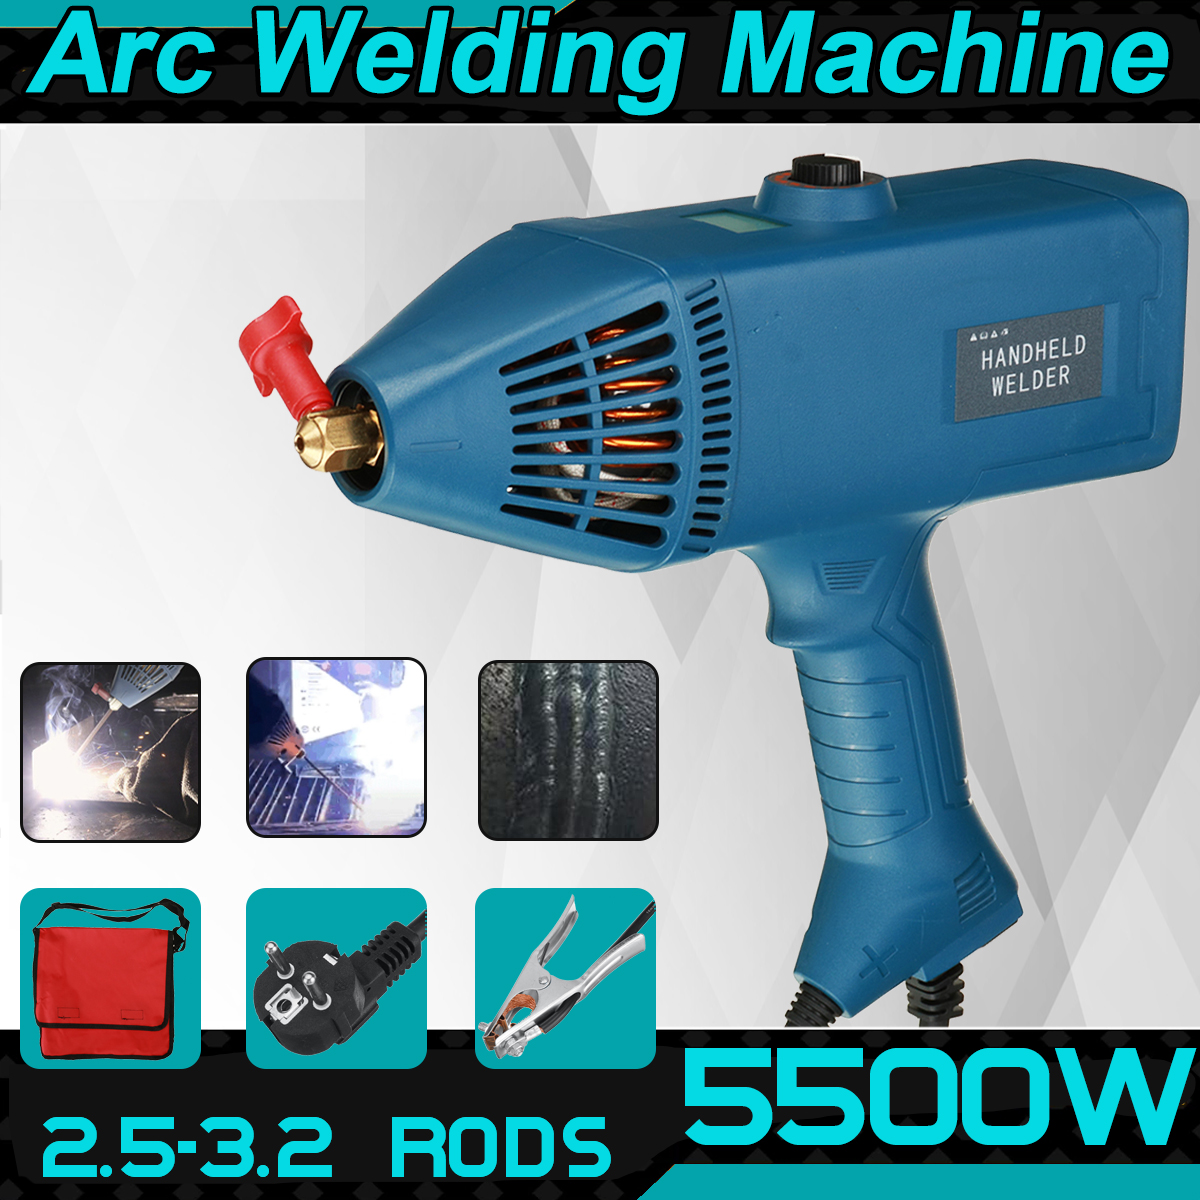 5500W-ARC-Welding-Machine-Handheld-Electric-Welding-Tools-with-Ground-Wire-Metal-Clip-220V-EU-Plug-1901484-1